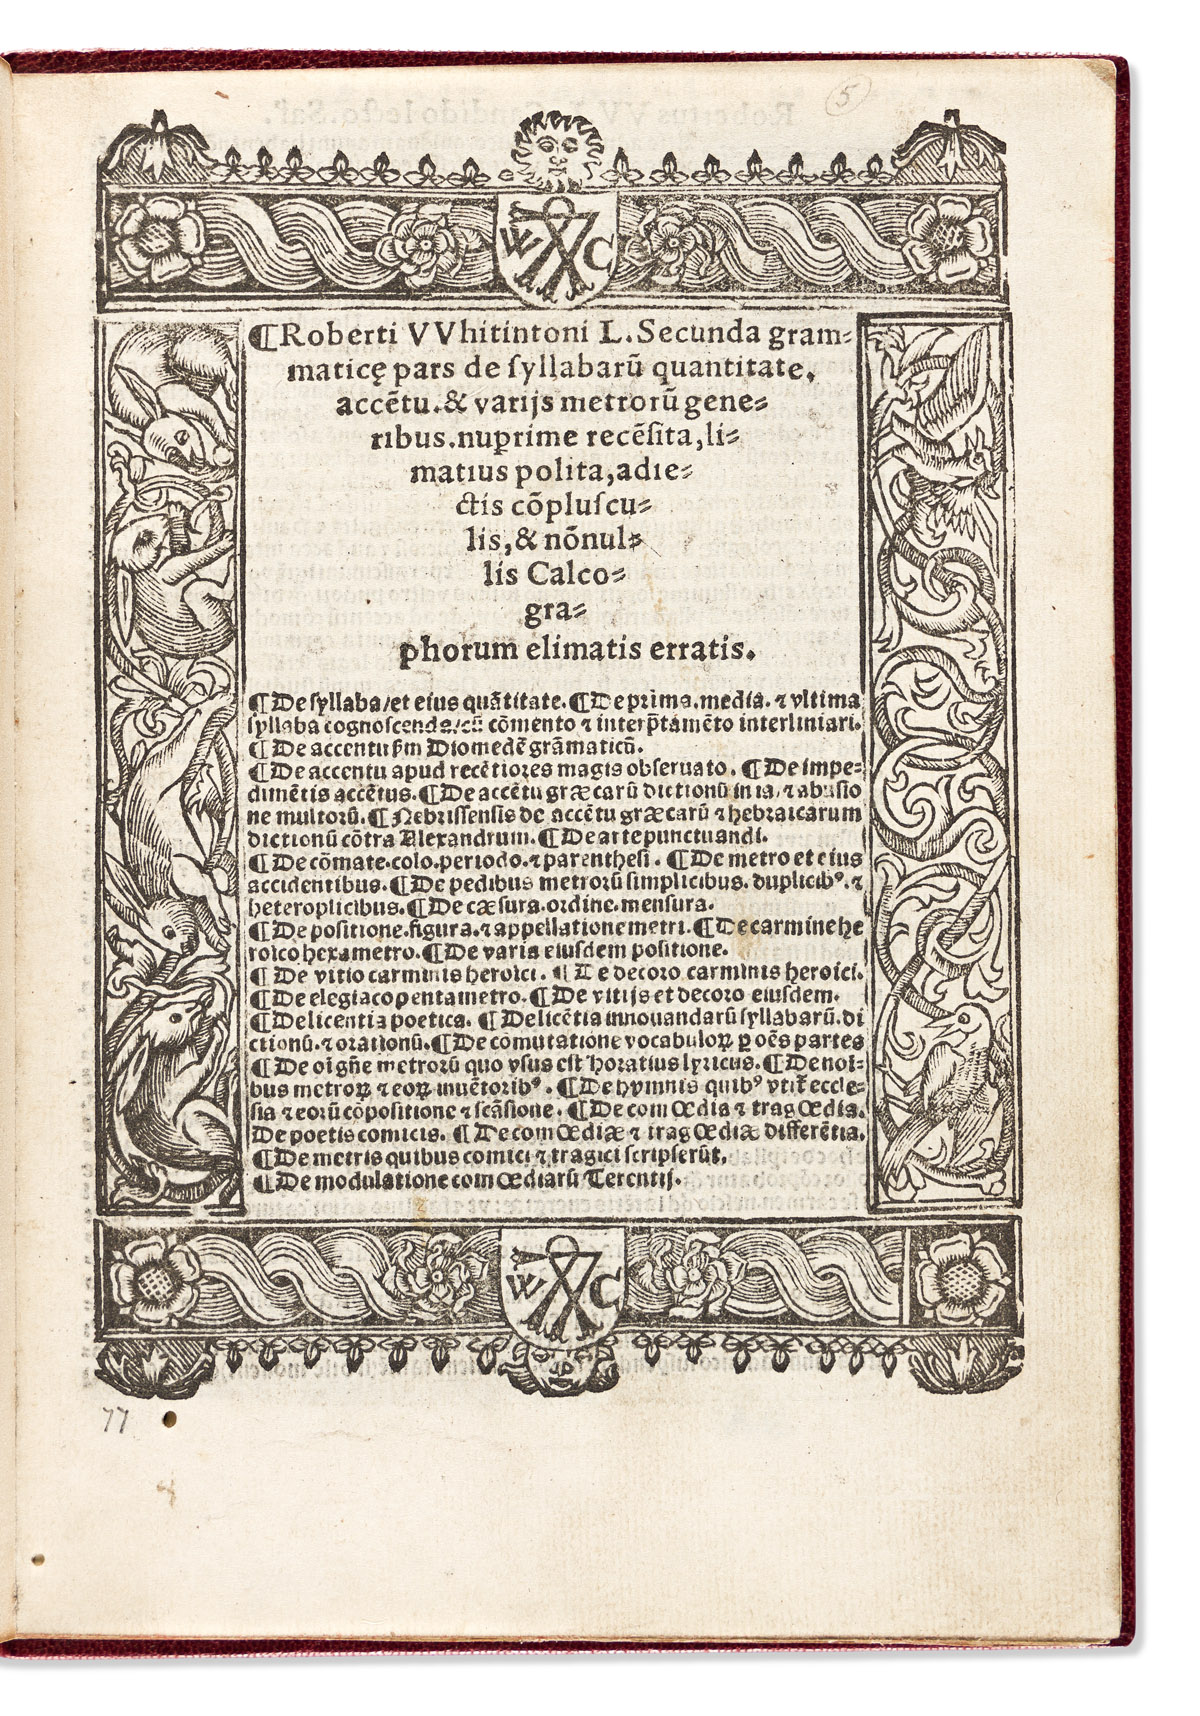 Whittington, Robert (fl. circa 1560) [De Syllabarum Quantitate] Secunda Grammatic[a]e Pars de Syllabaru[m] Quantitate.